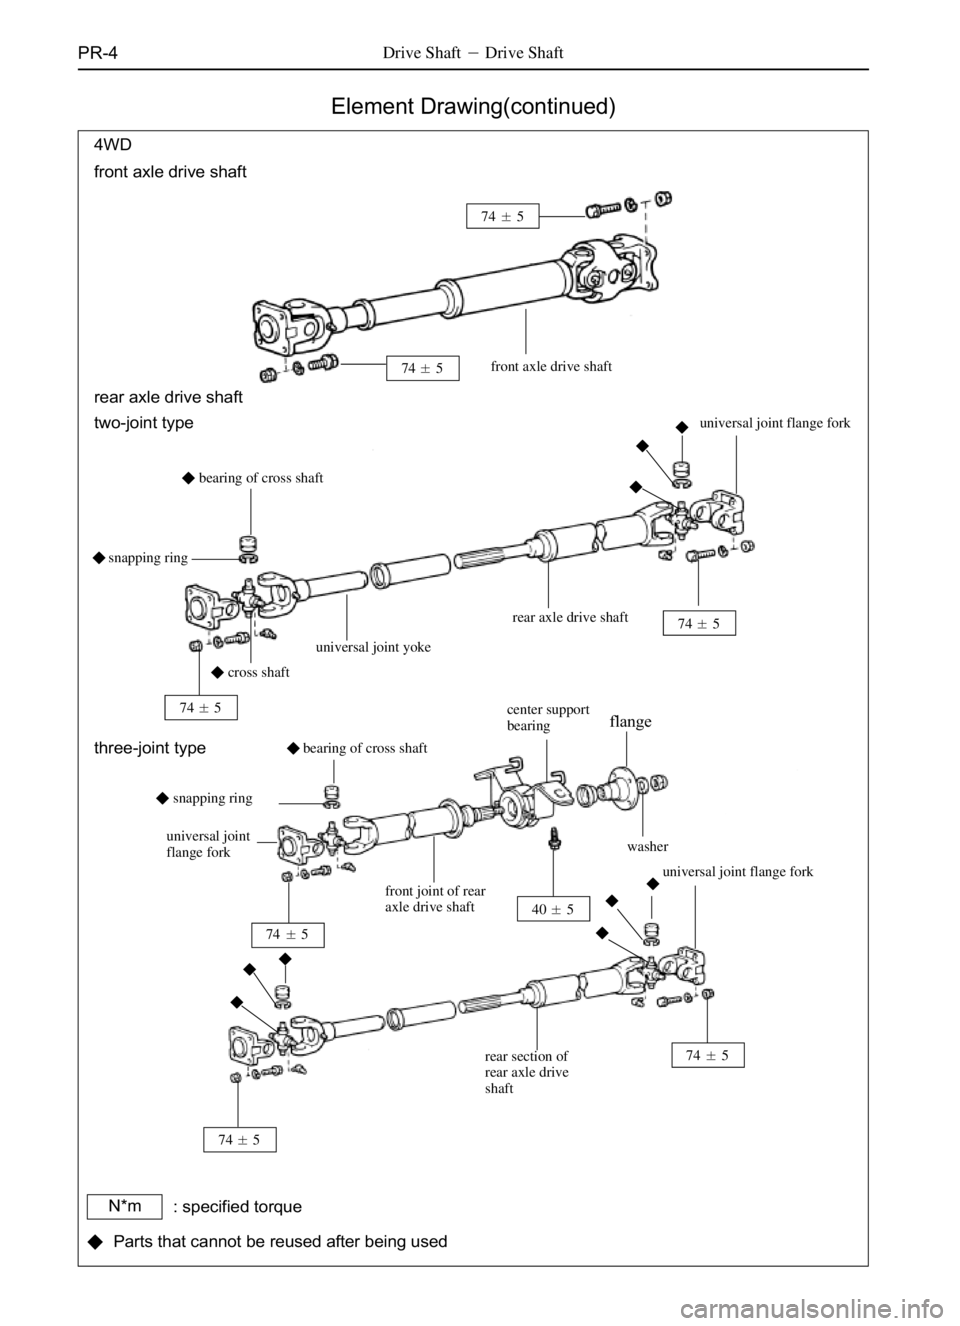 GREAT WALL DEER 2006  Service Manual PR-4Drive ShaftDrive Shaft
Element Drawing(continued)
4WD
front axle drive shaft
front axle drive shaft745
745
rear axle drive shaft
two-joint type
snapping ringbearing of cross shaft
745
745
